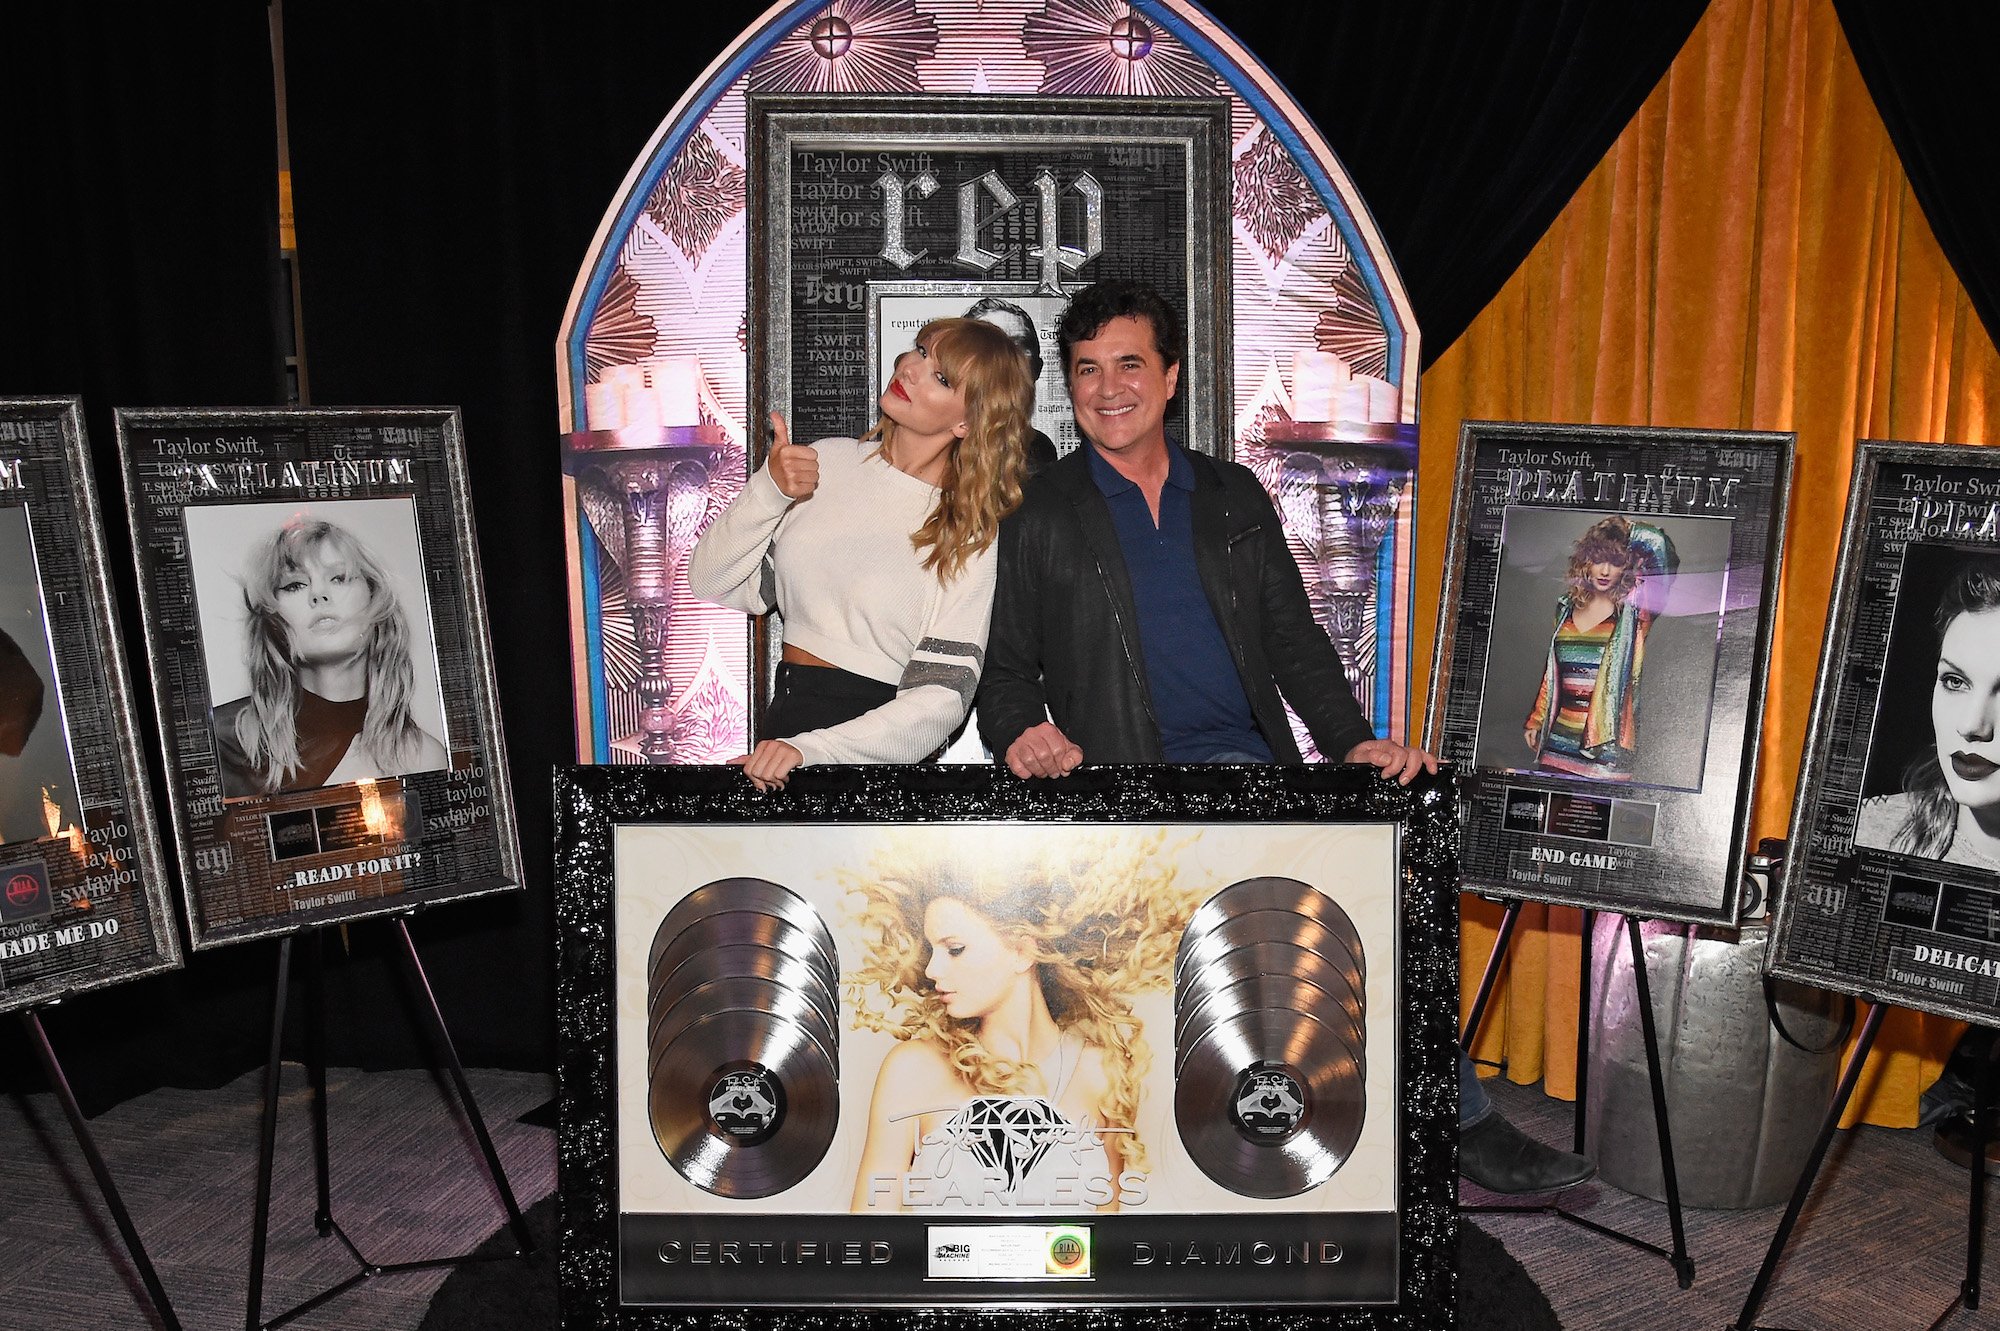 Taylor Swift and CEO of Big Machine Records Scott Borchetta plaque presentation at the Taylor Swift reputation Stadium Tour on July 21, 2018